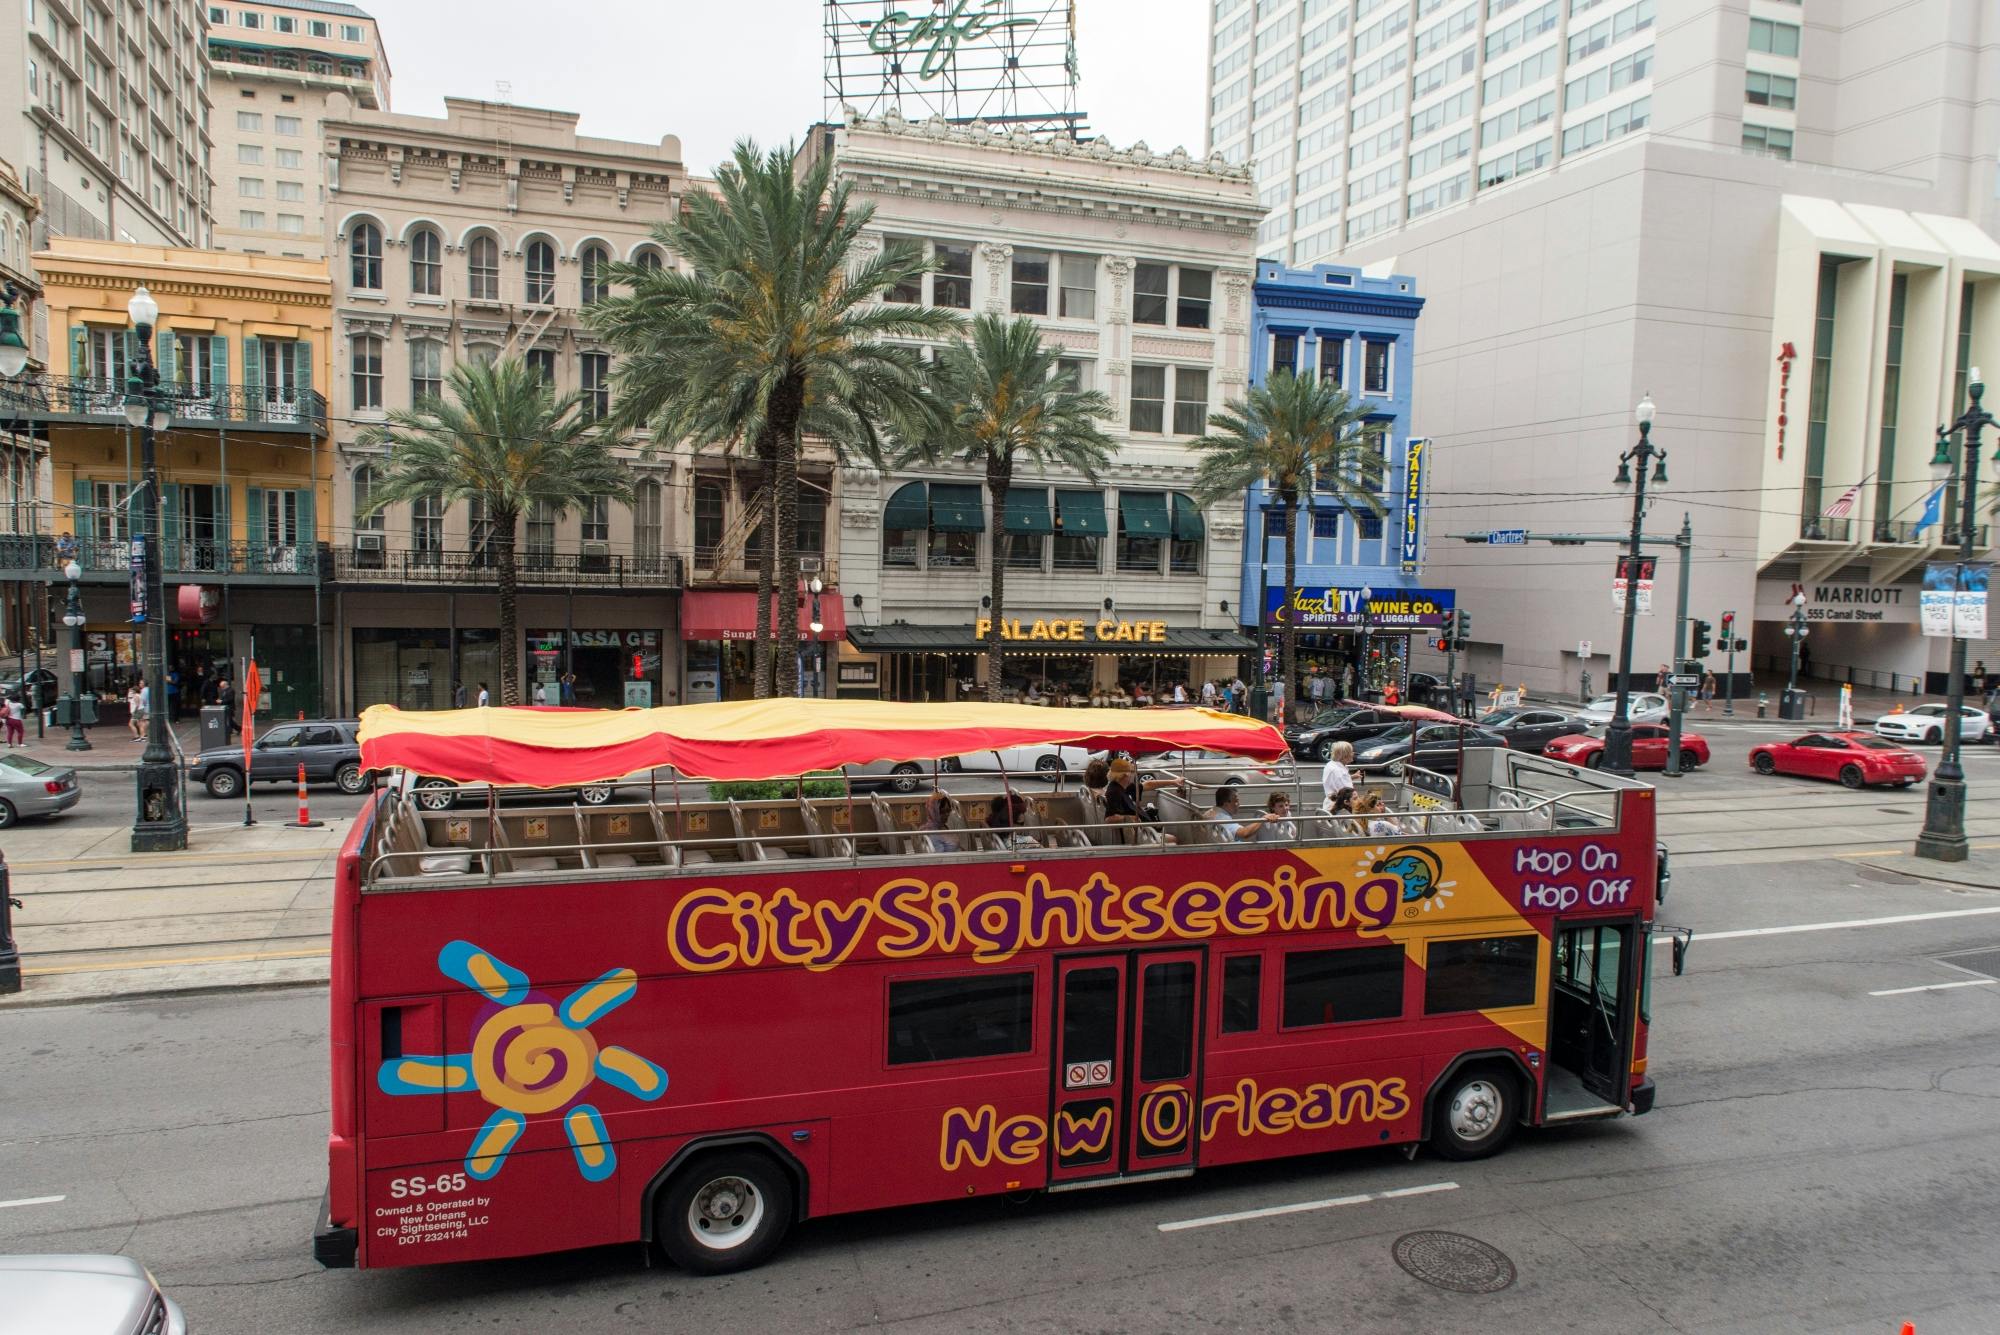 Wycieczka autobusowa typu hop-on hop-off po Nowym Orleanie w ramach City Sightseeing